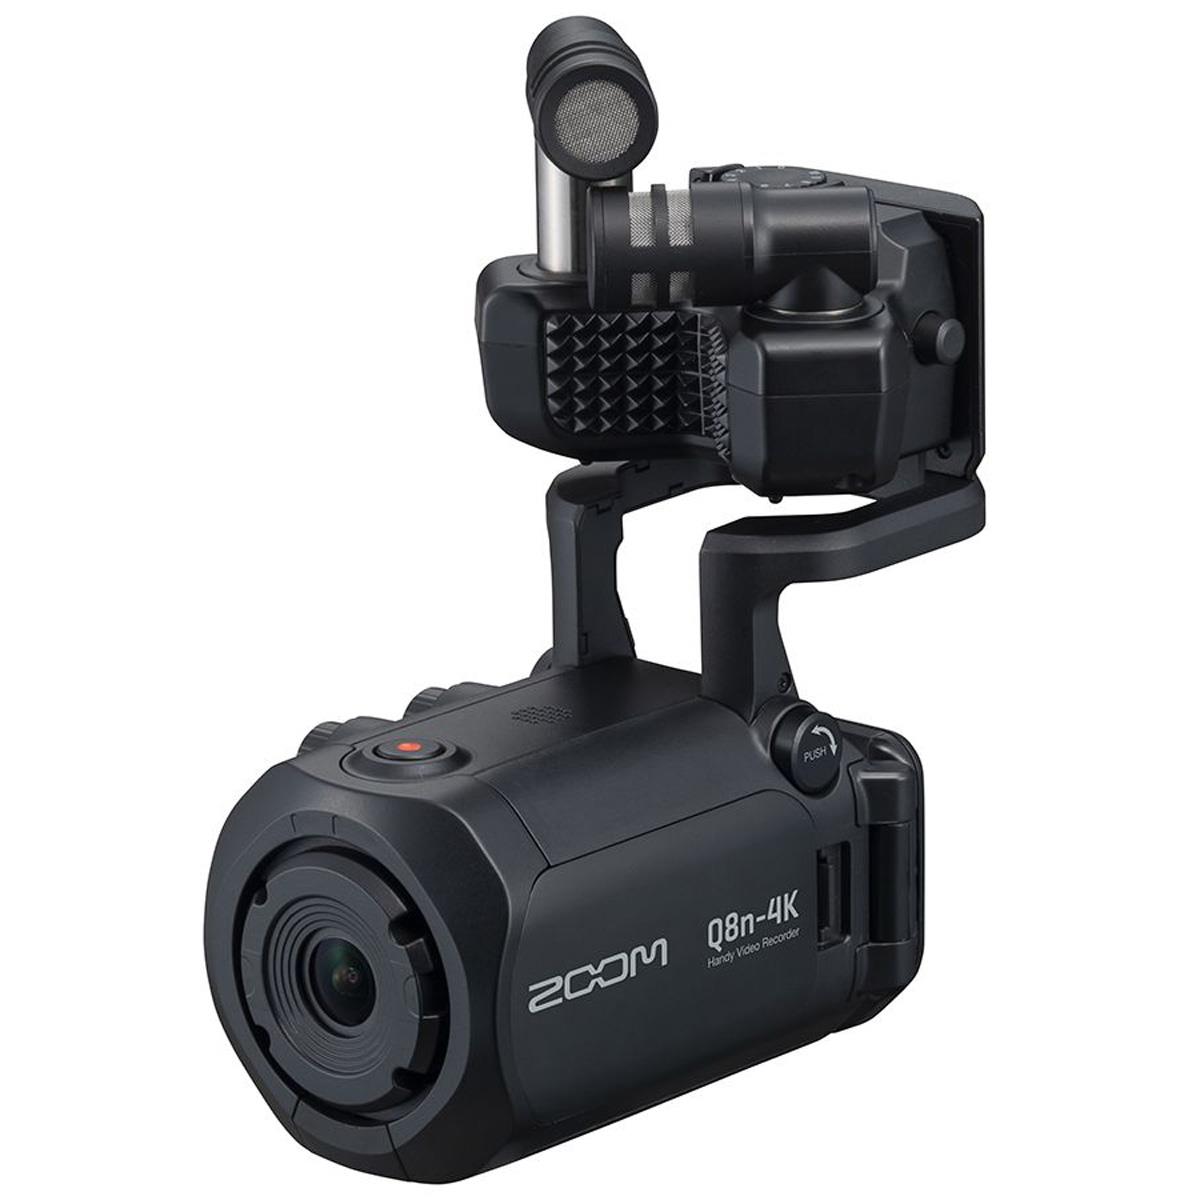 Image of Zoom Q8n-4K Handy Video Recorder